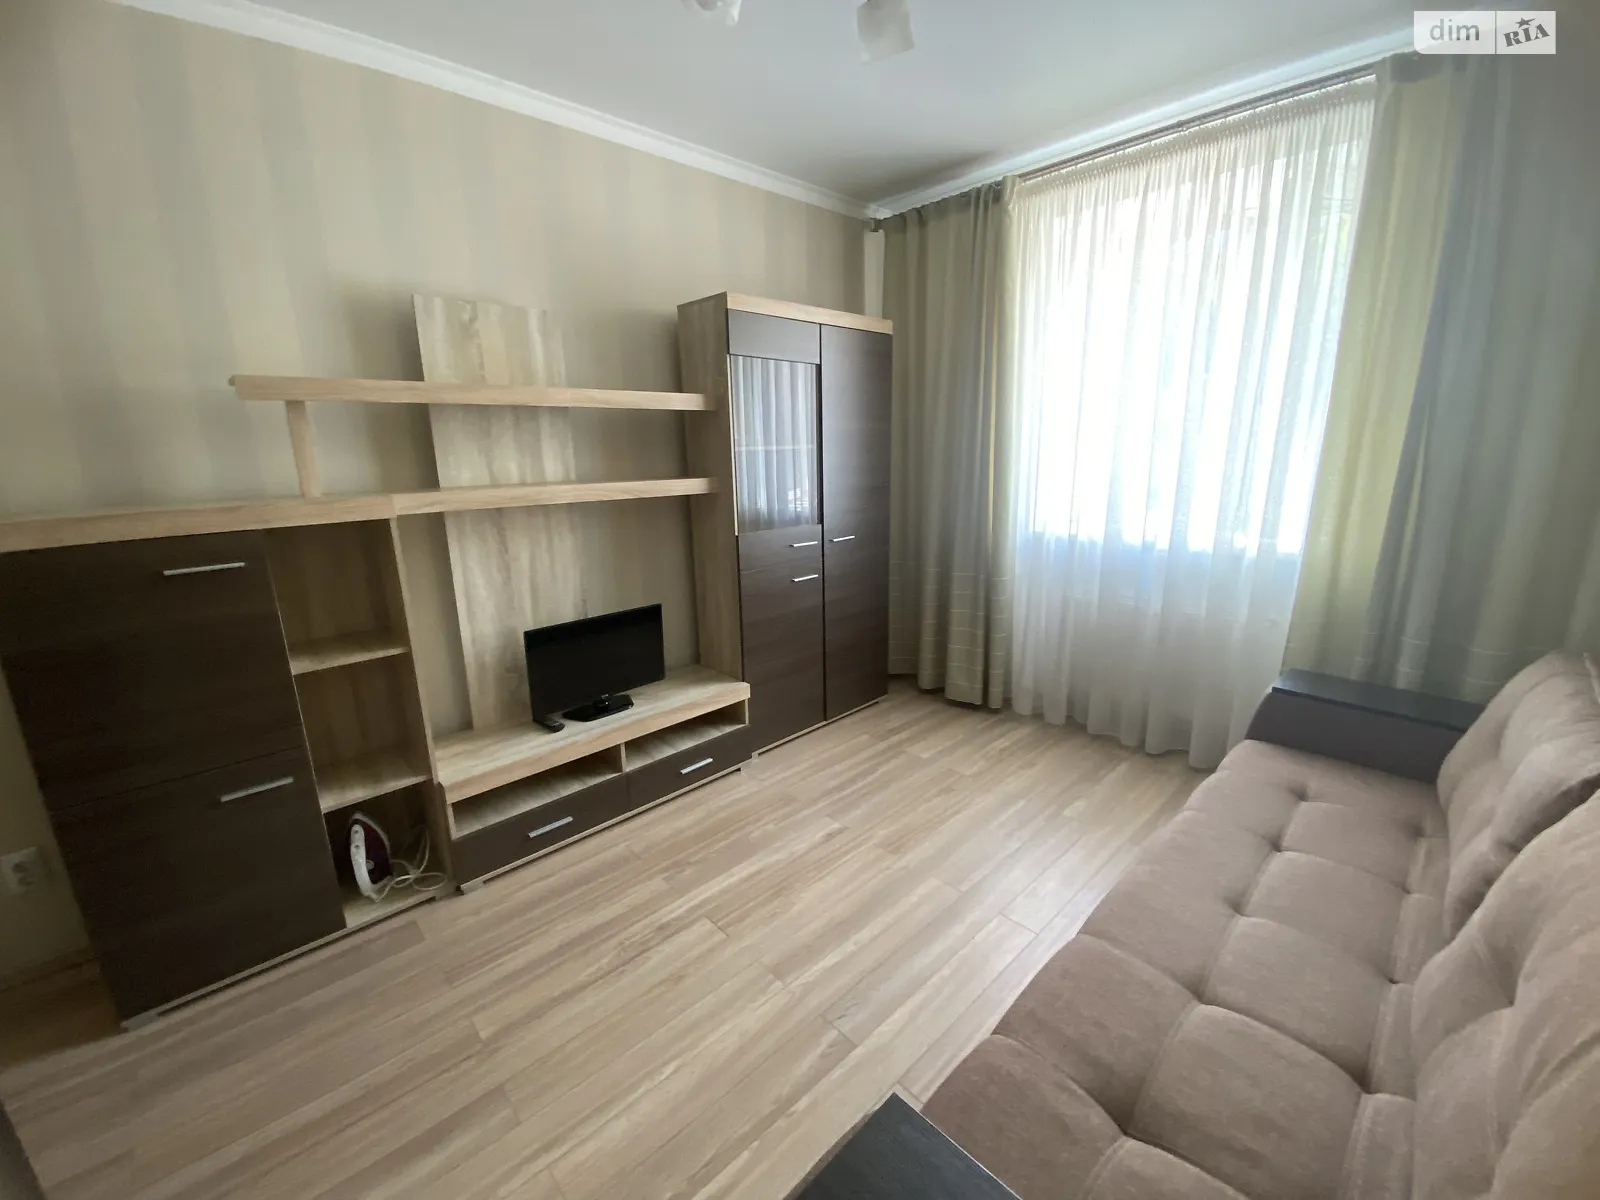 Сдается в аренду 1-комнатная квартира 48 кв. м в Виннице, ул. Марии Примаченко(Покрышкина), 8Г - фото 1